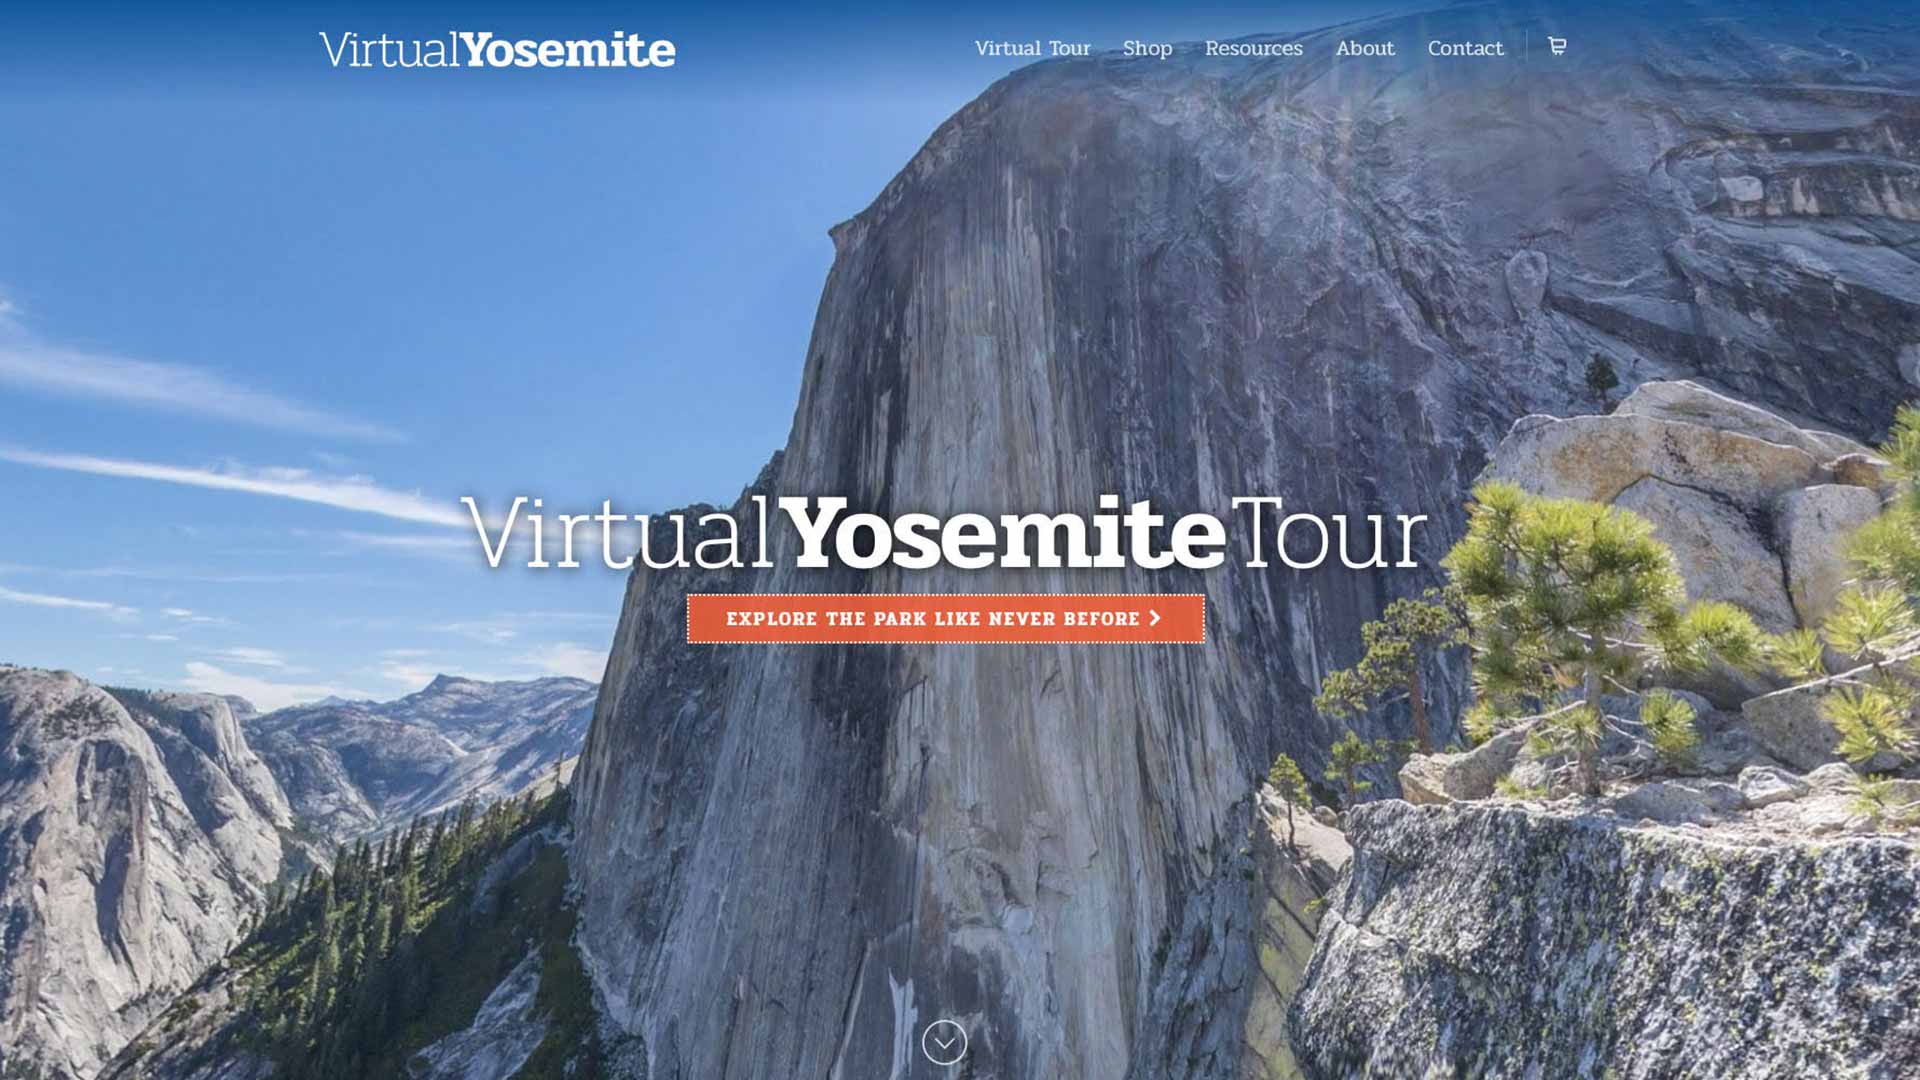 Opening screen of Virtual Yosemite website